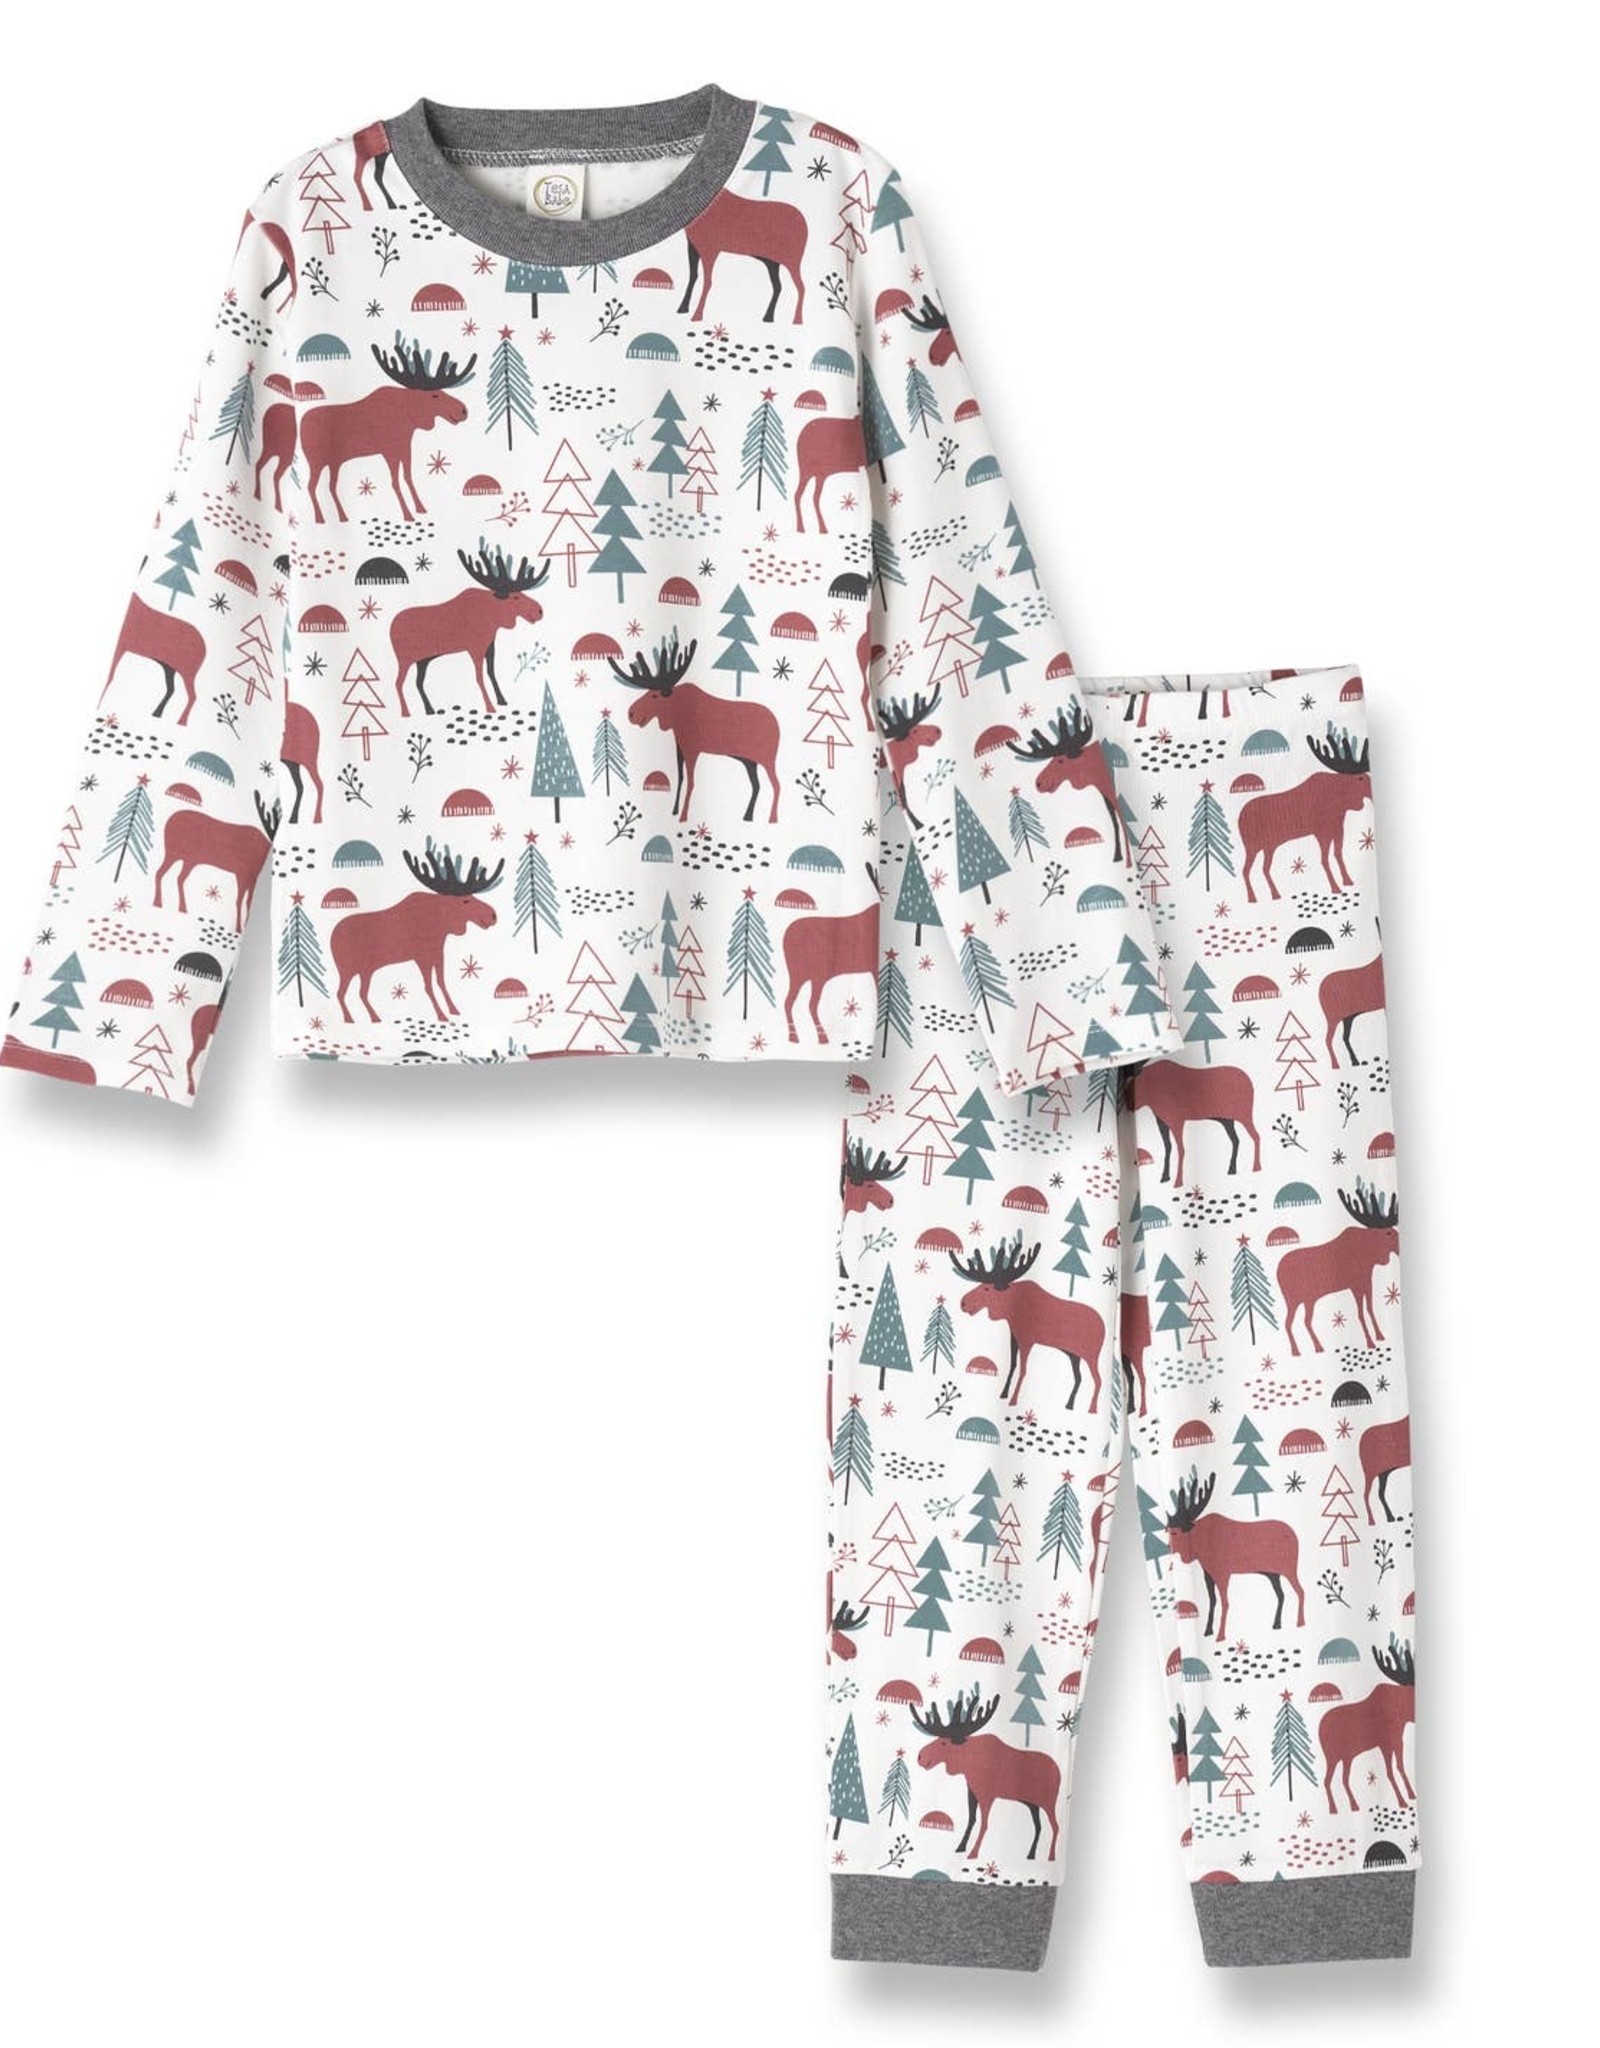 Moose Tracks Kids Pajamas - Bellies-2-Babies